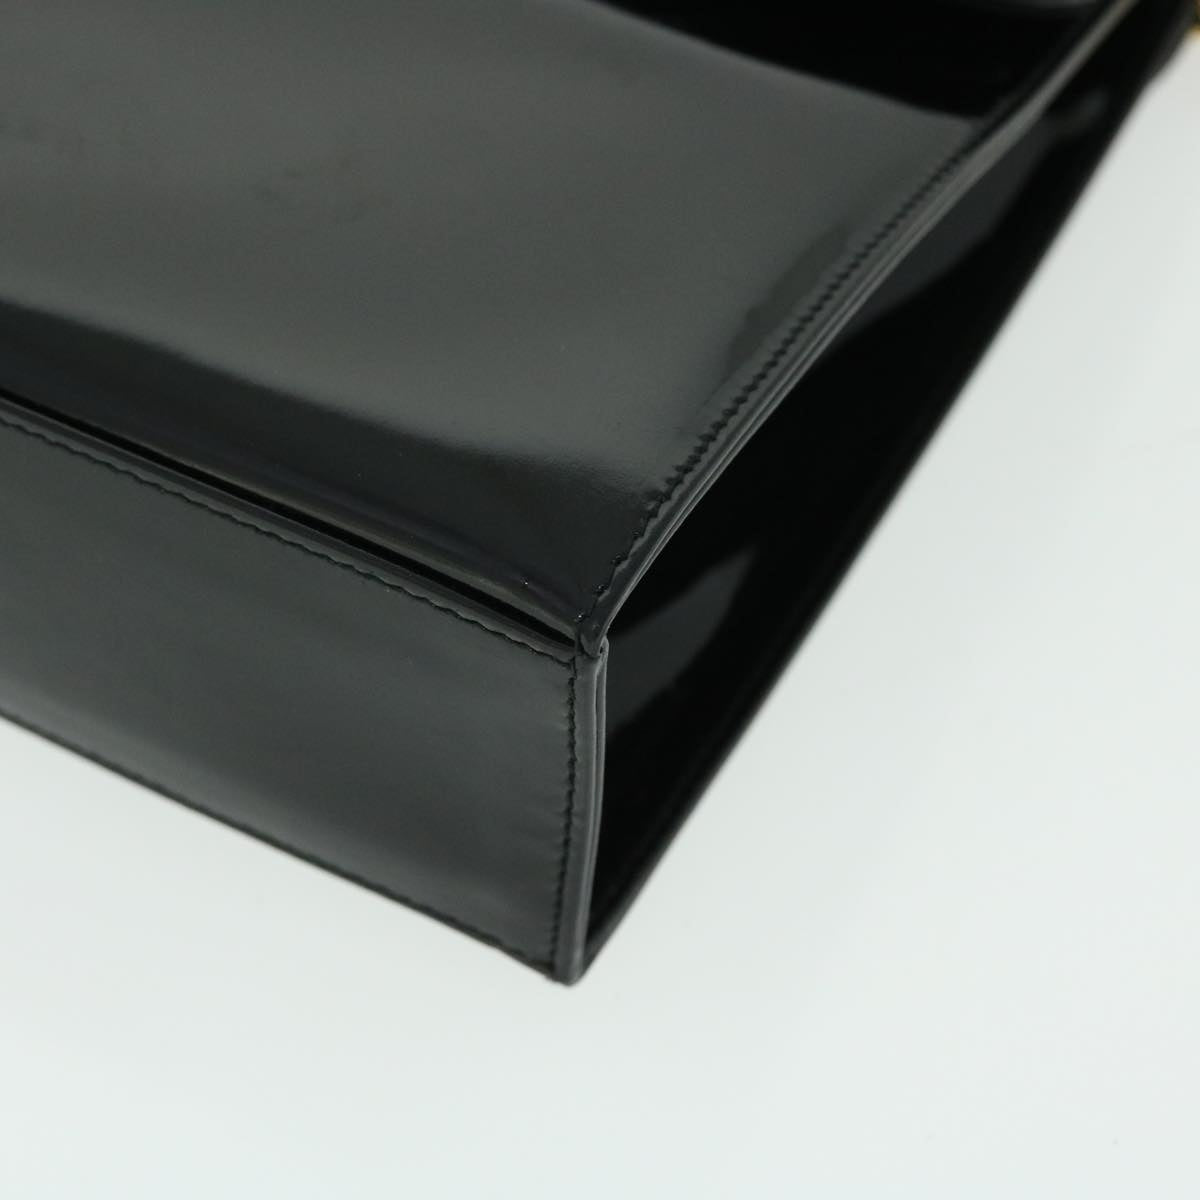 Salvatore Ferragamo Gancini Chain Shoulder Bag Patent leather Black Auth bs7686